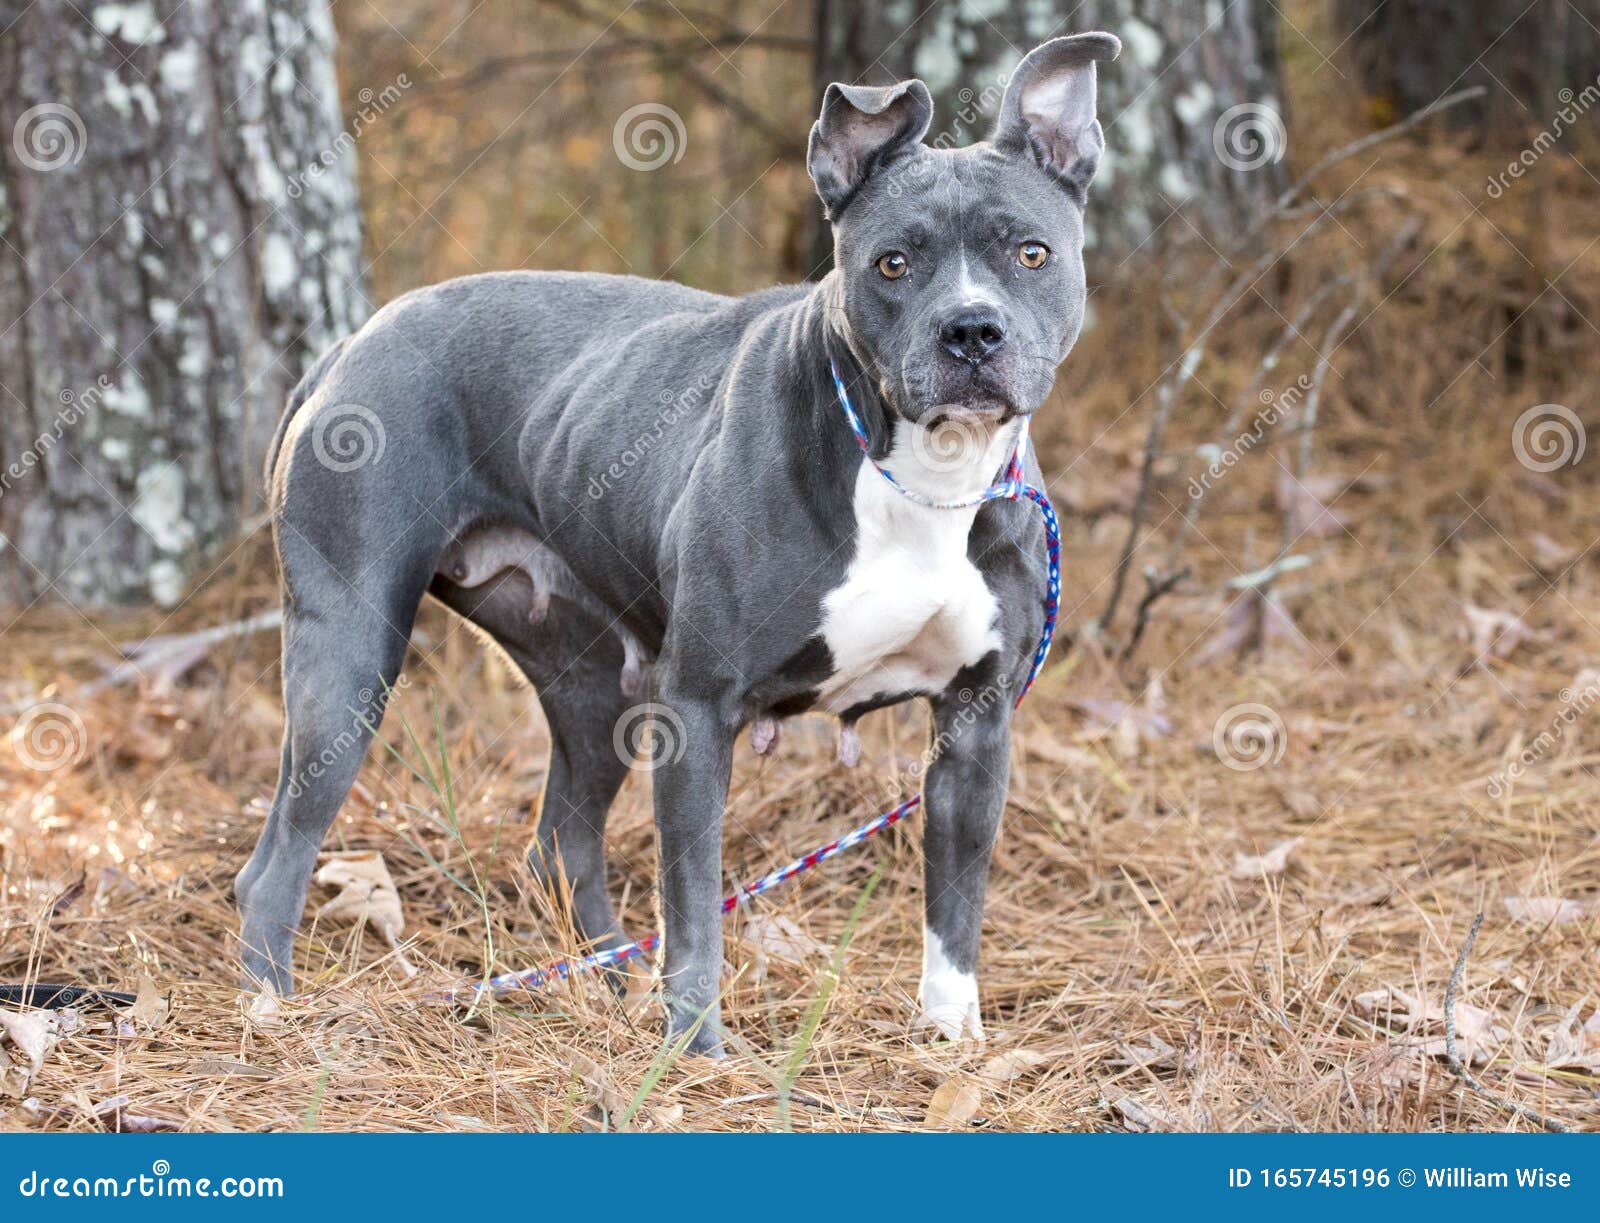 blue nose gray pitbull